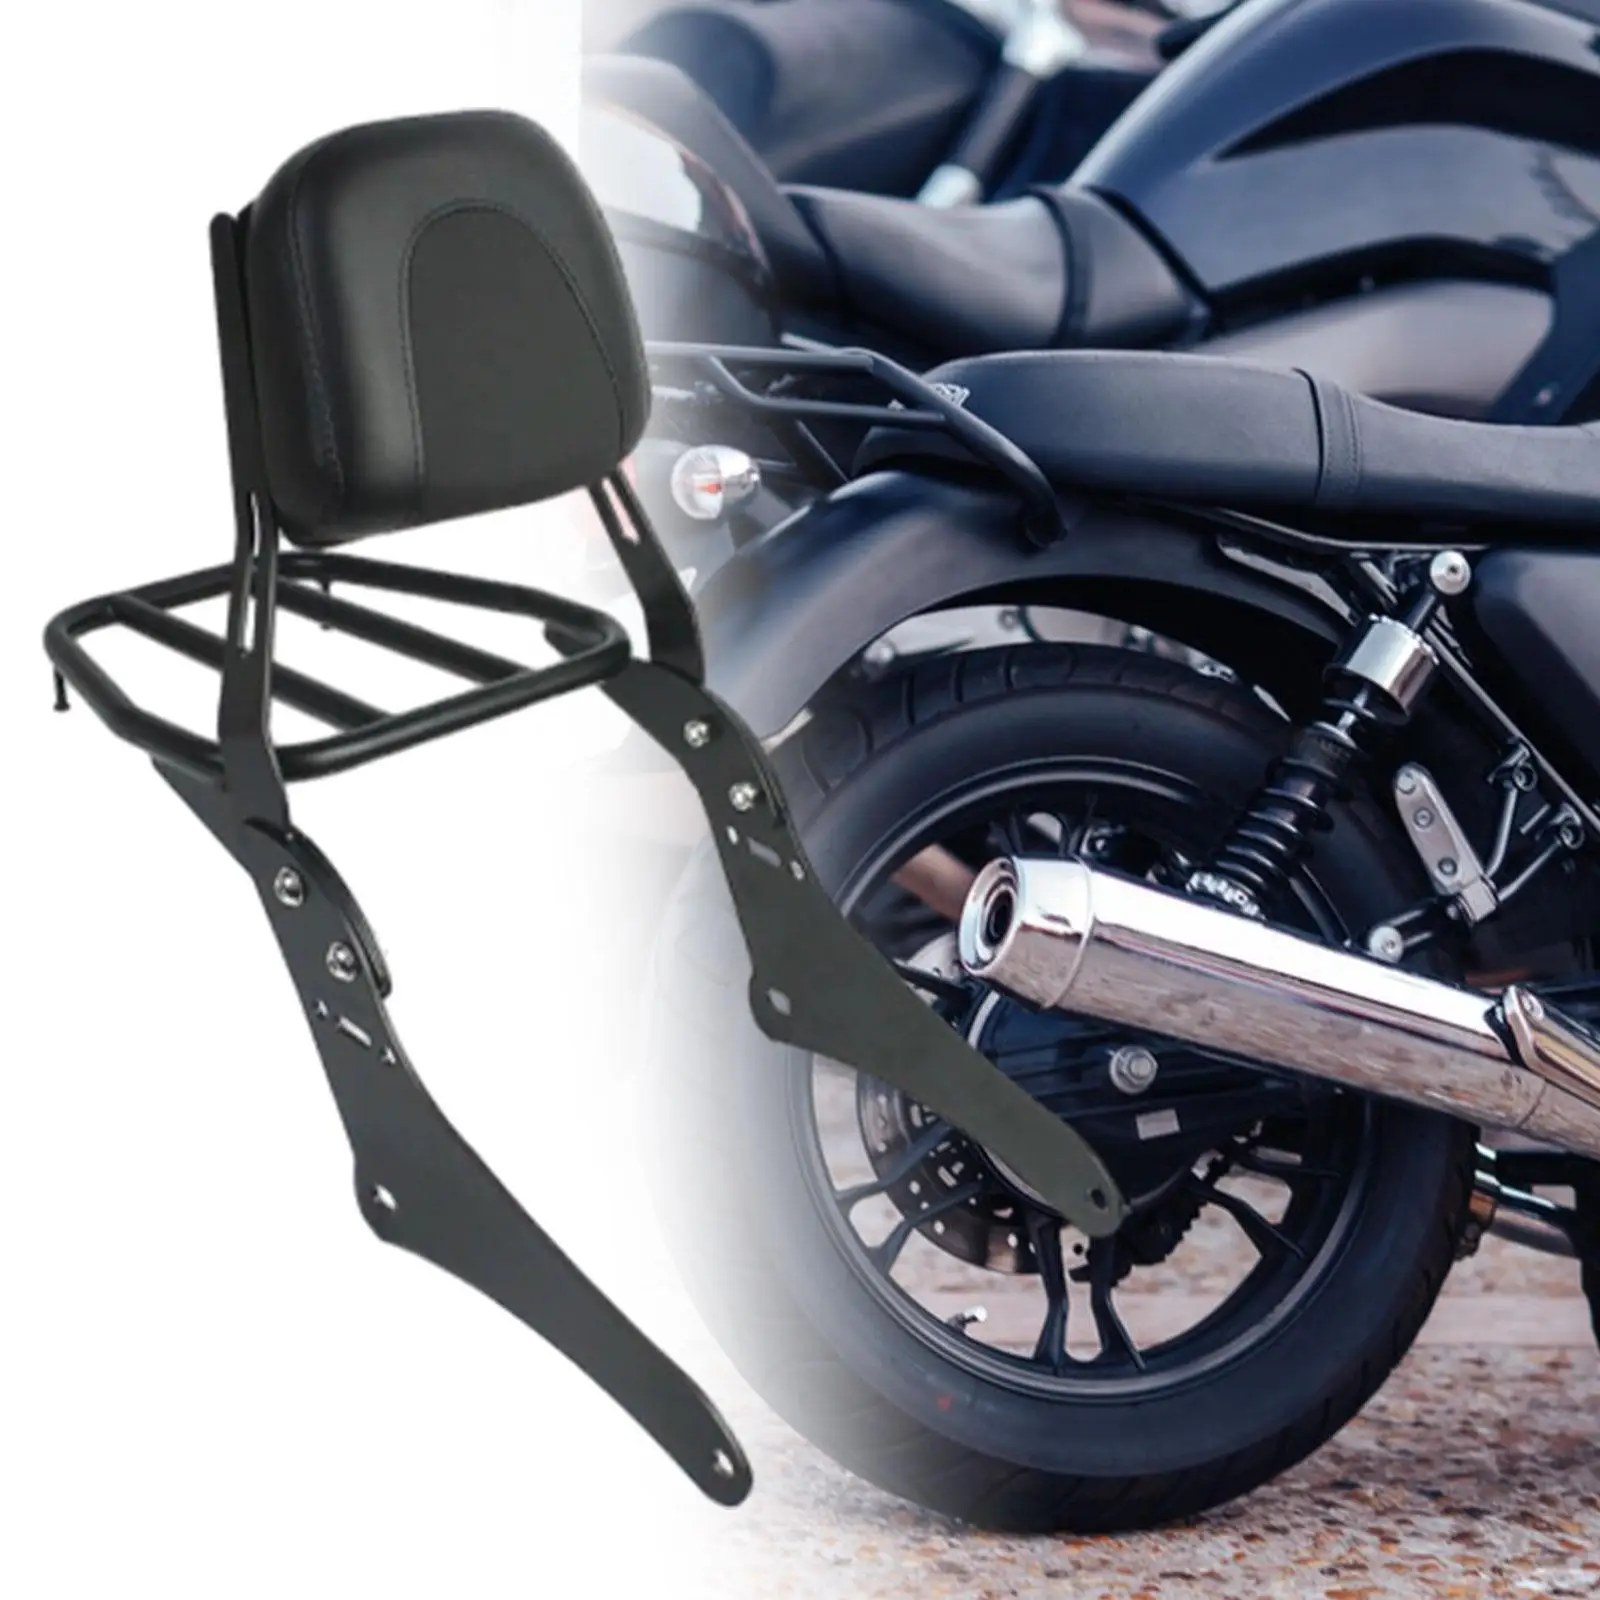 Motorcycle Sissy Bar Backrest Pad with Luggage Rack Passenger Backrest Rear Pad for Honda Rebel cm300 cm500 Easy Install